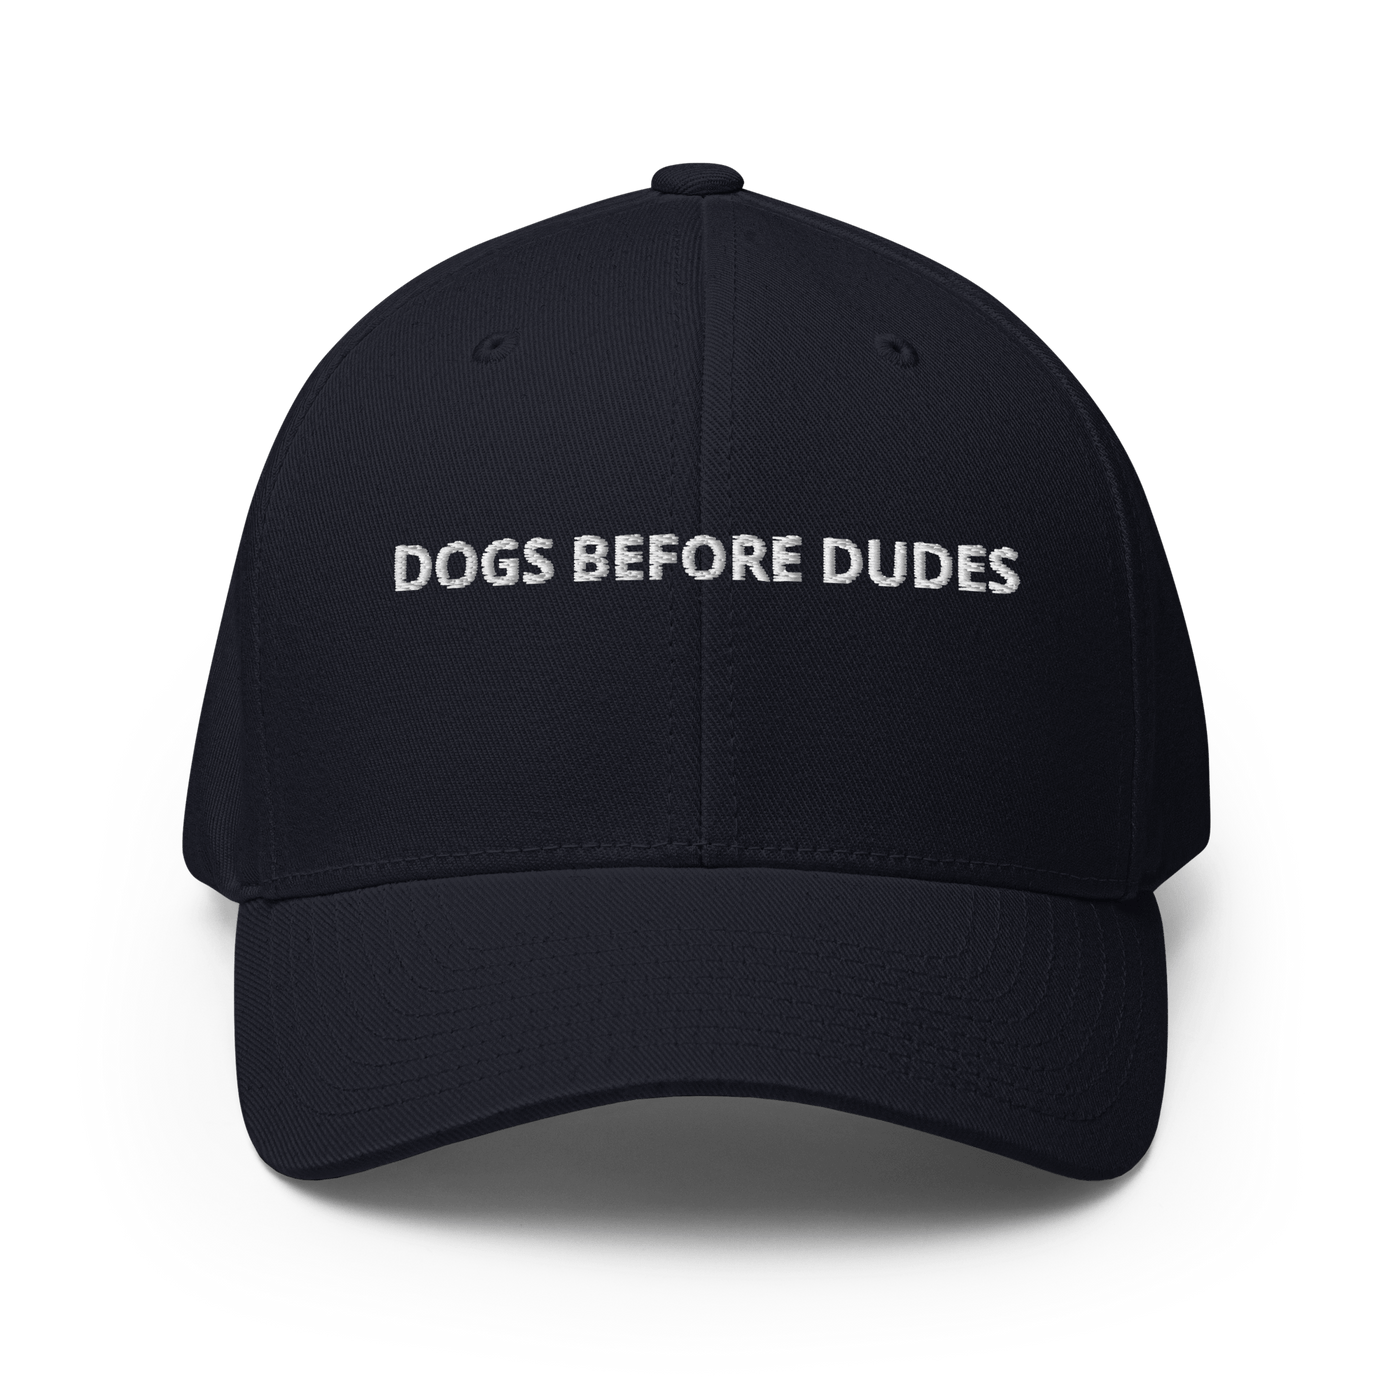 Dogs before Dudes Flexfit Cap - Dark Navy - S/M - Just Another Cap Store